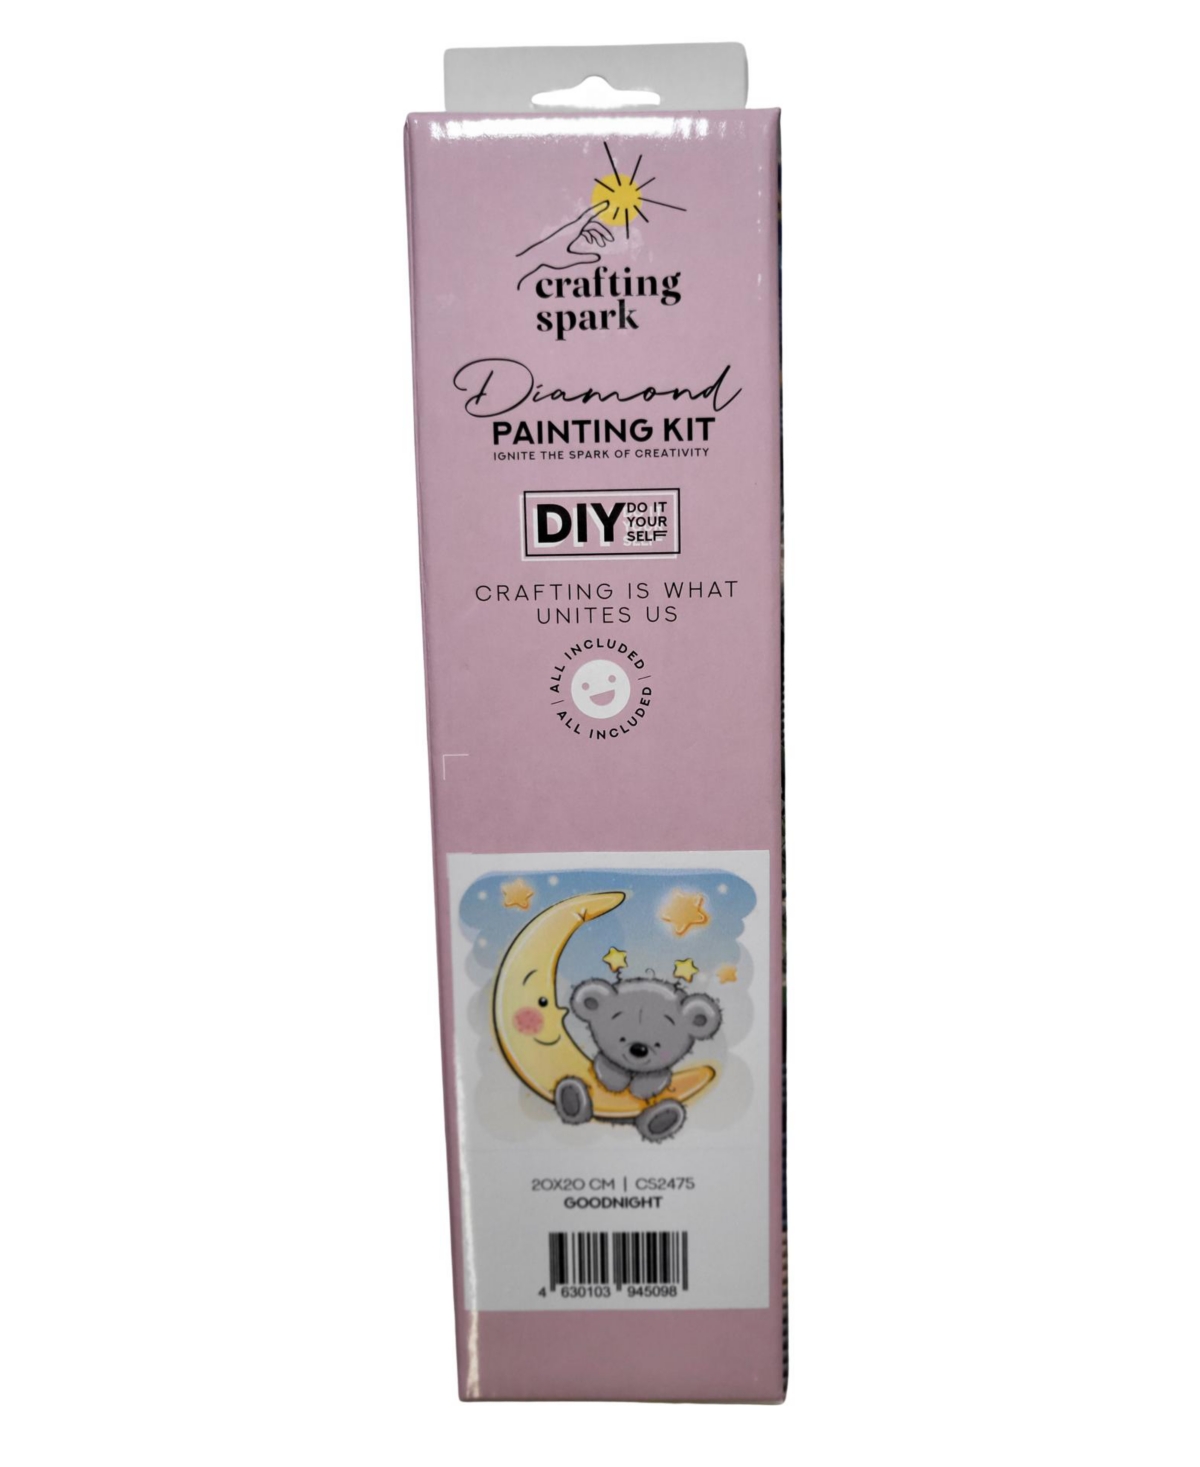 Crafting Spark Diamond Painting Kit Goodnight CS2475 7.9 x 7.9 inches